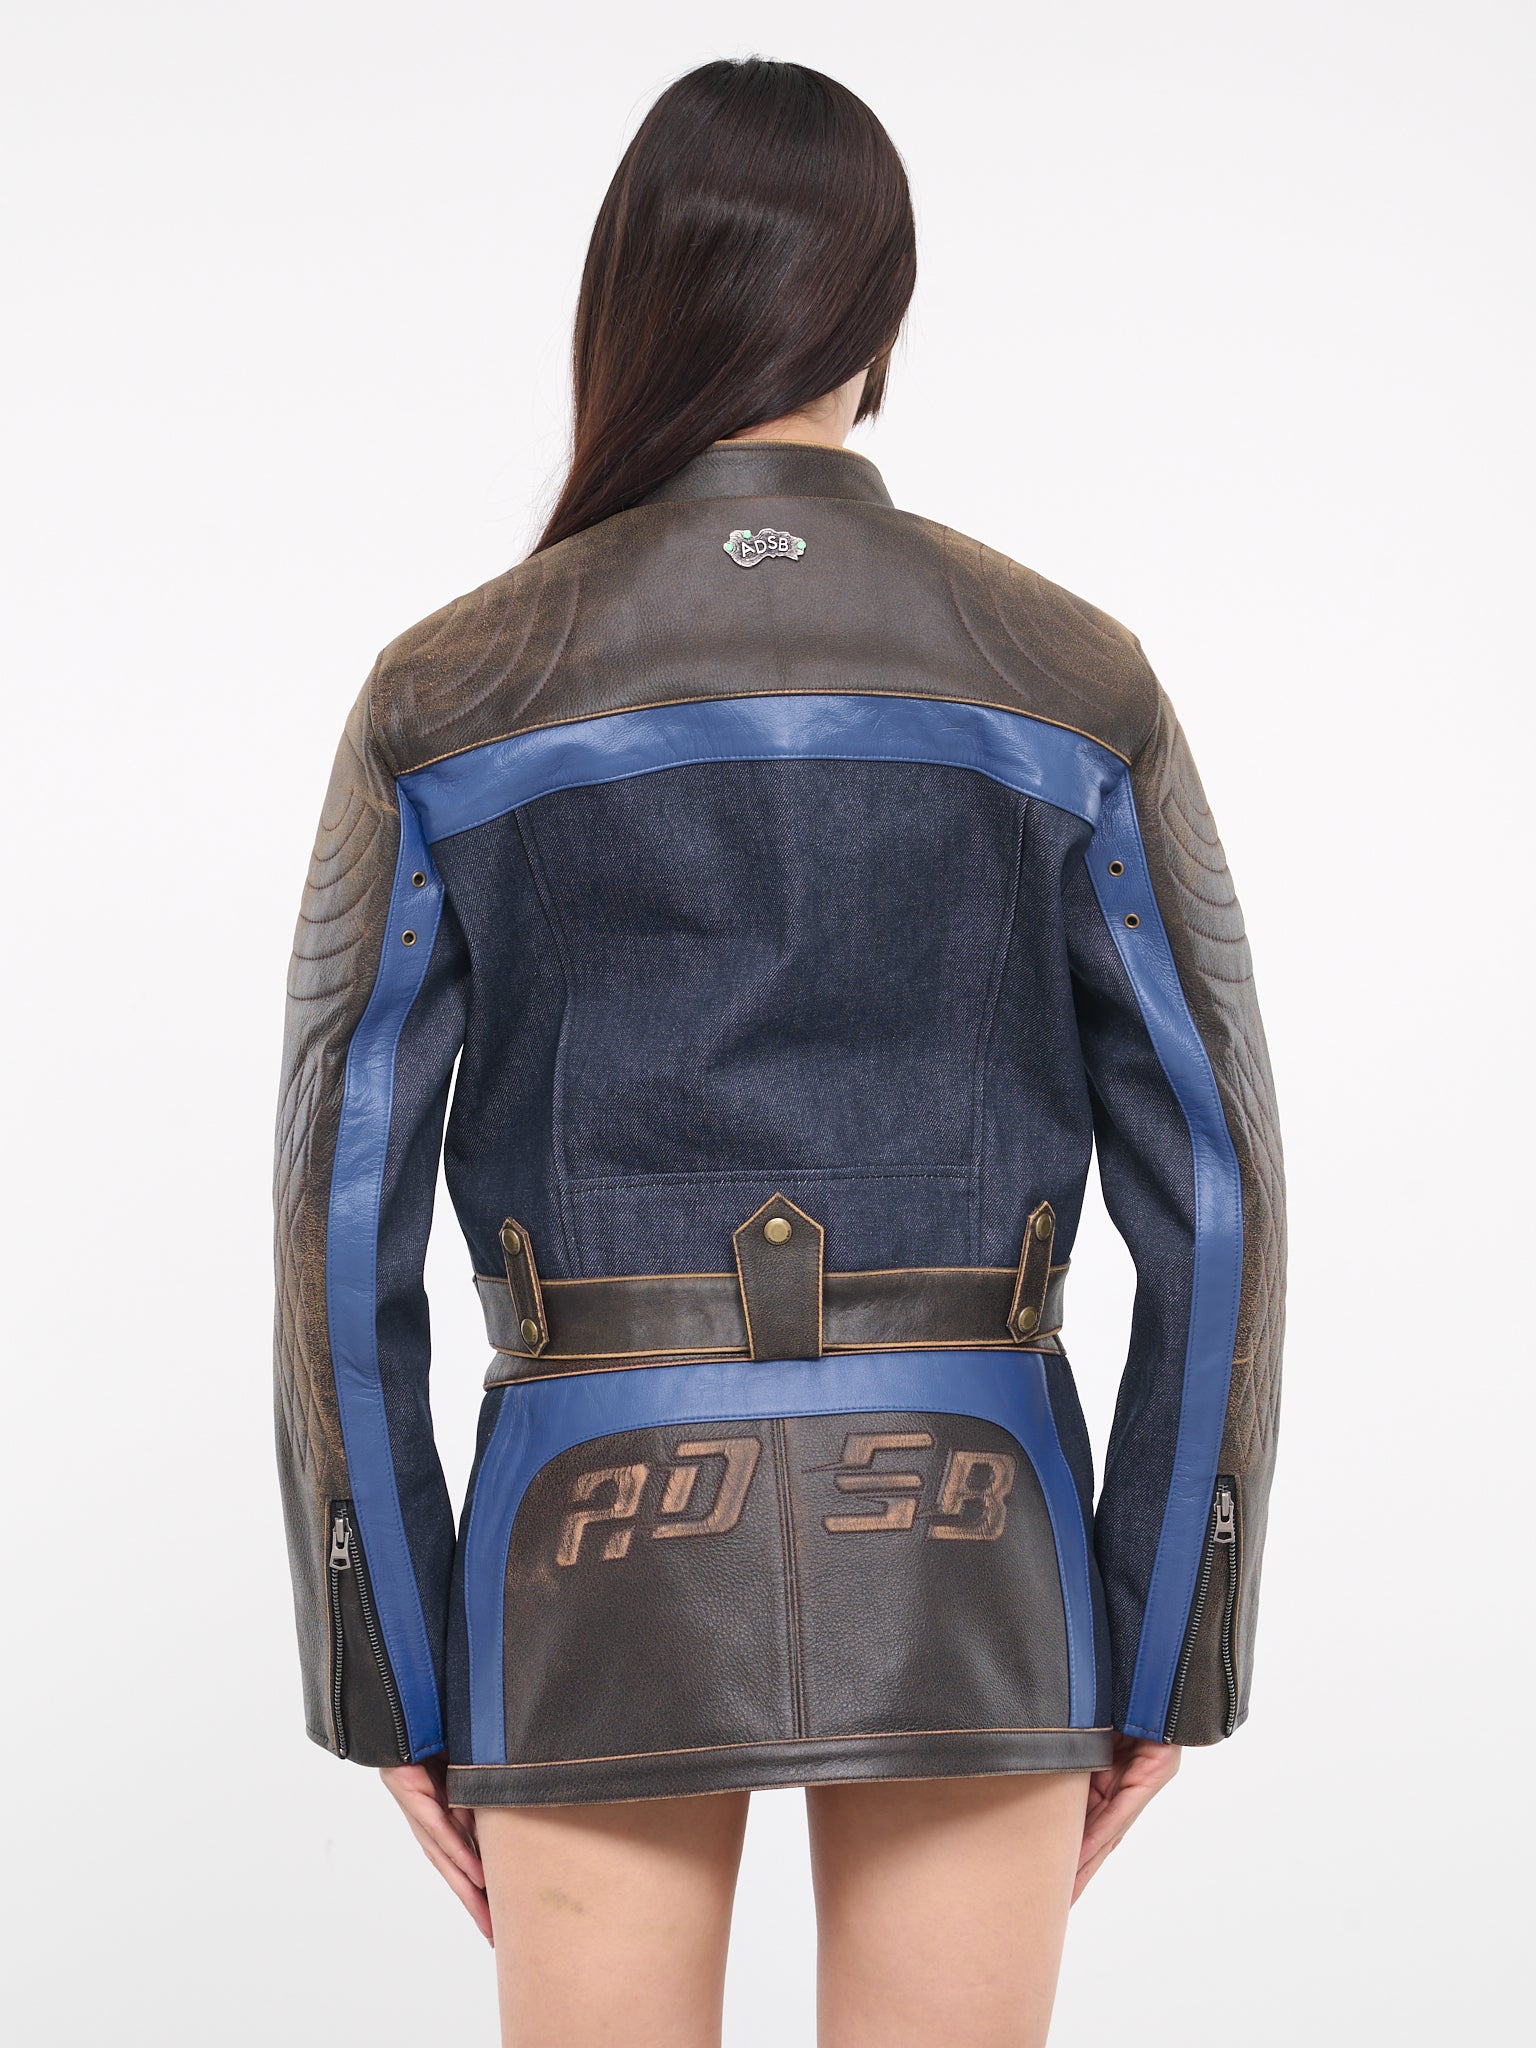 Combo Racing Leather Jacket (AWA593W-BROWN)